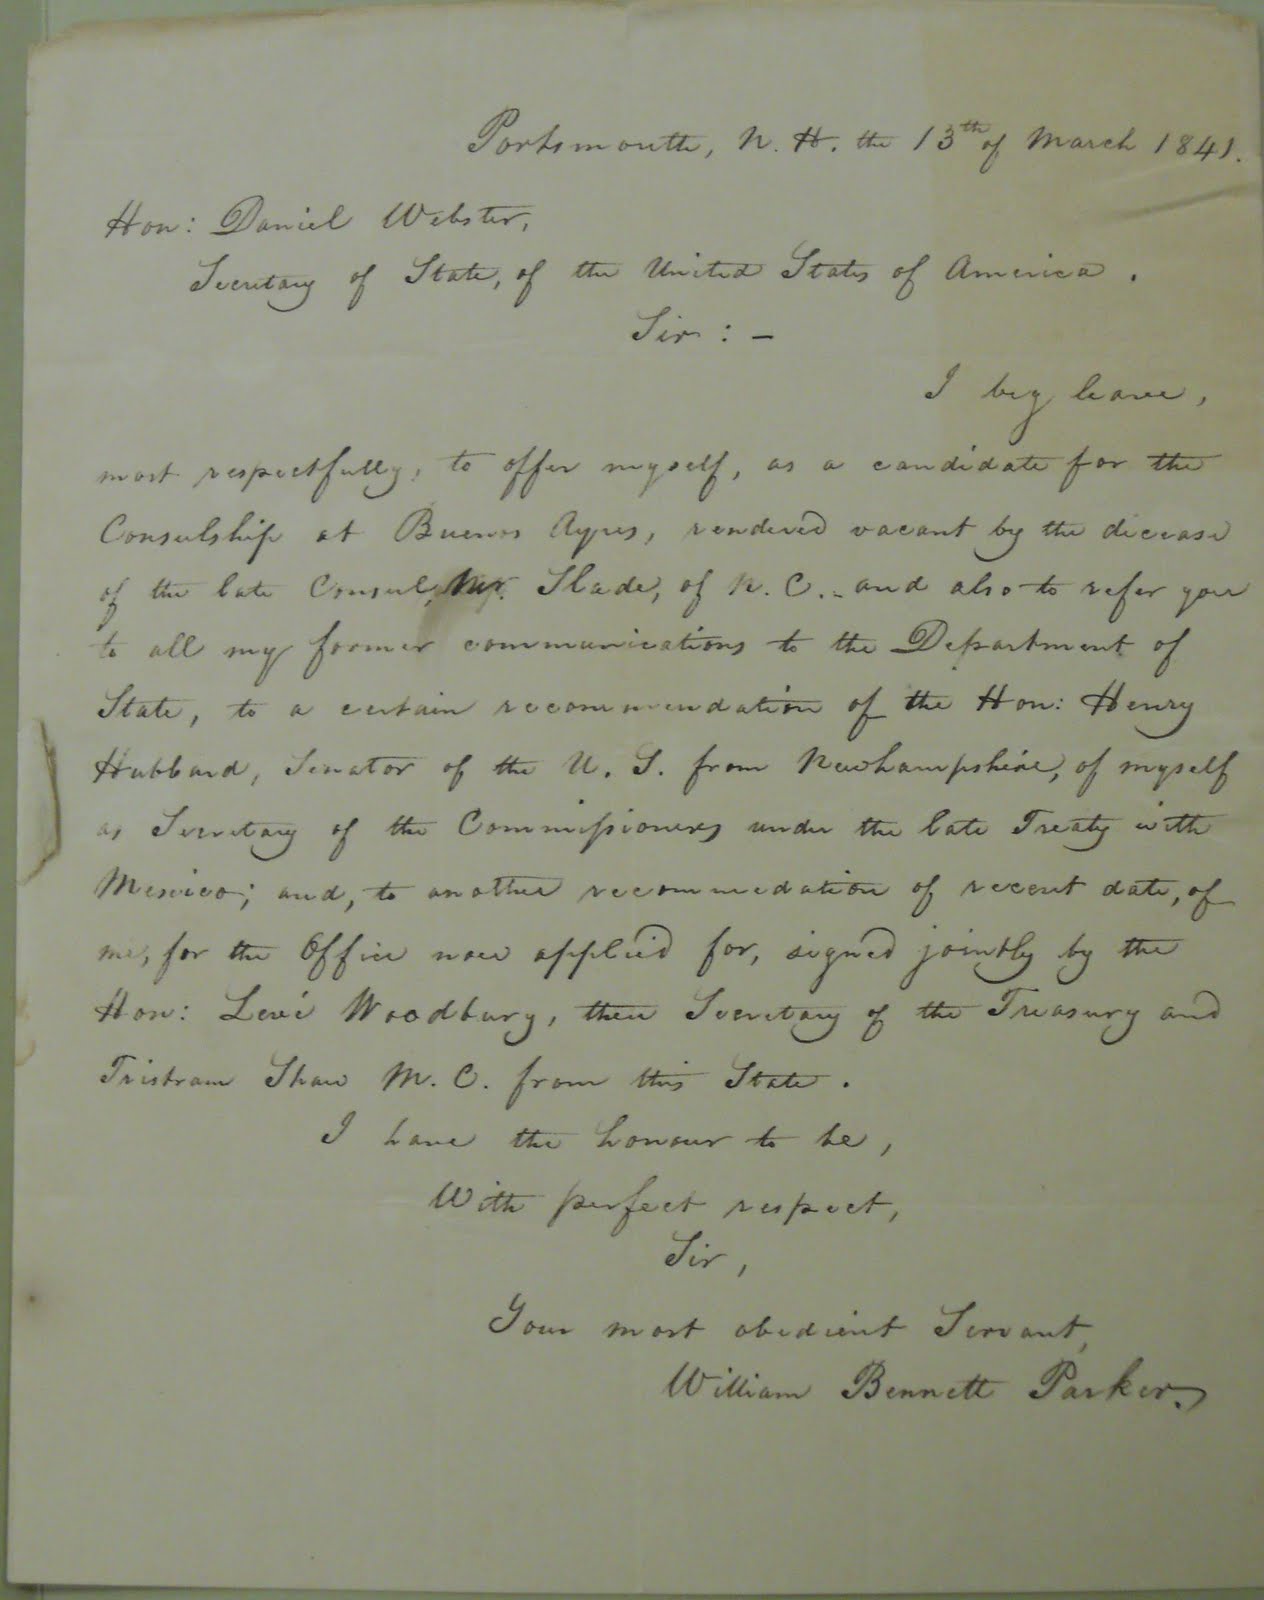 Handwritten letter addressed to Webster